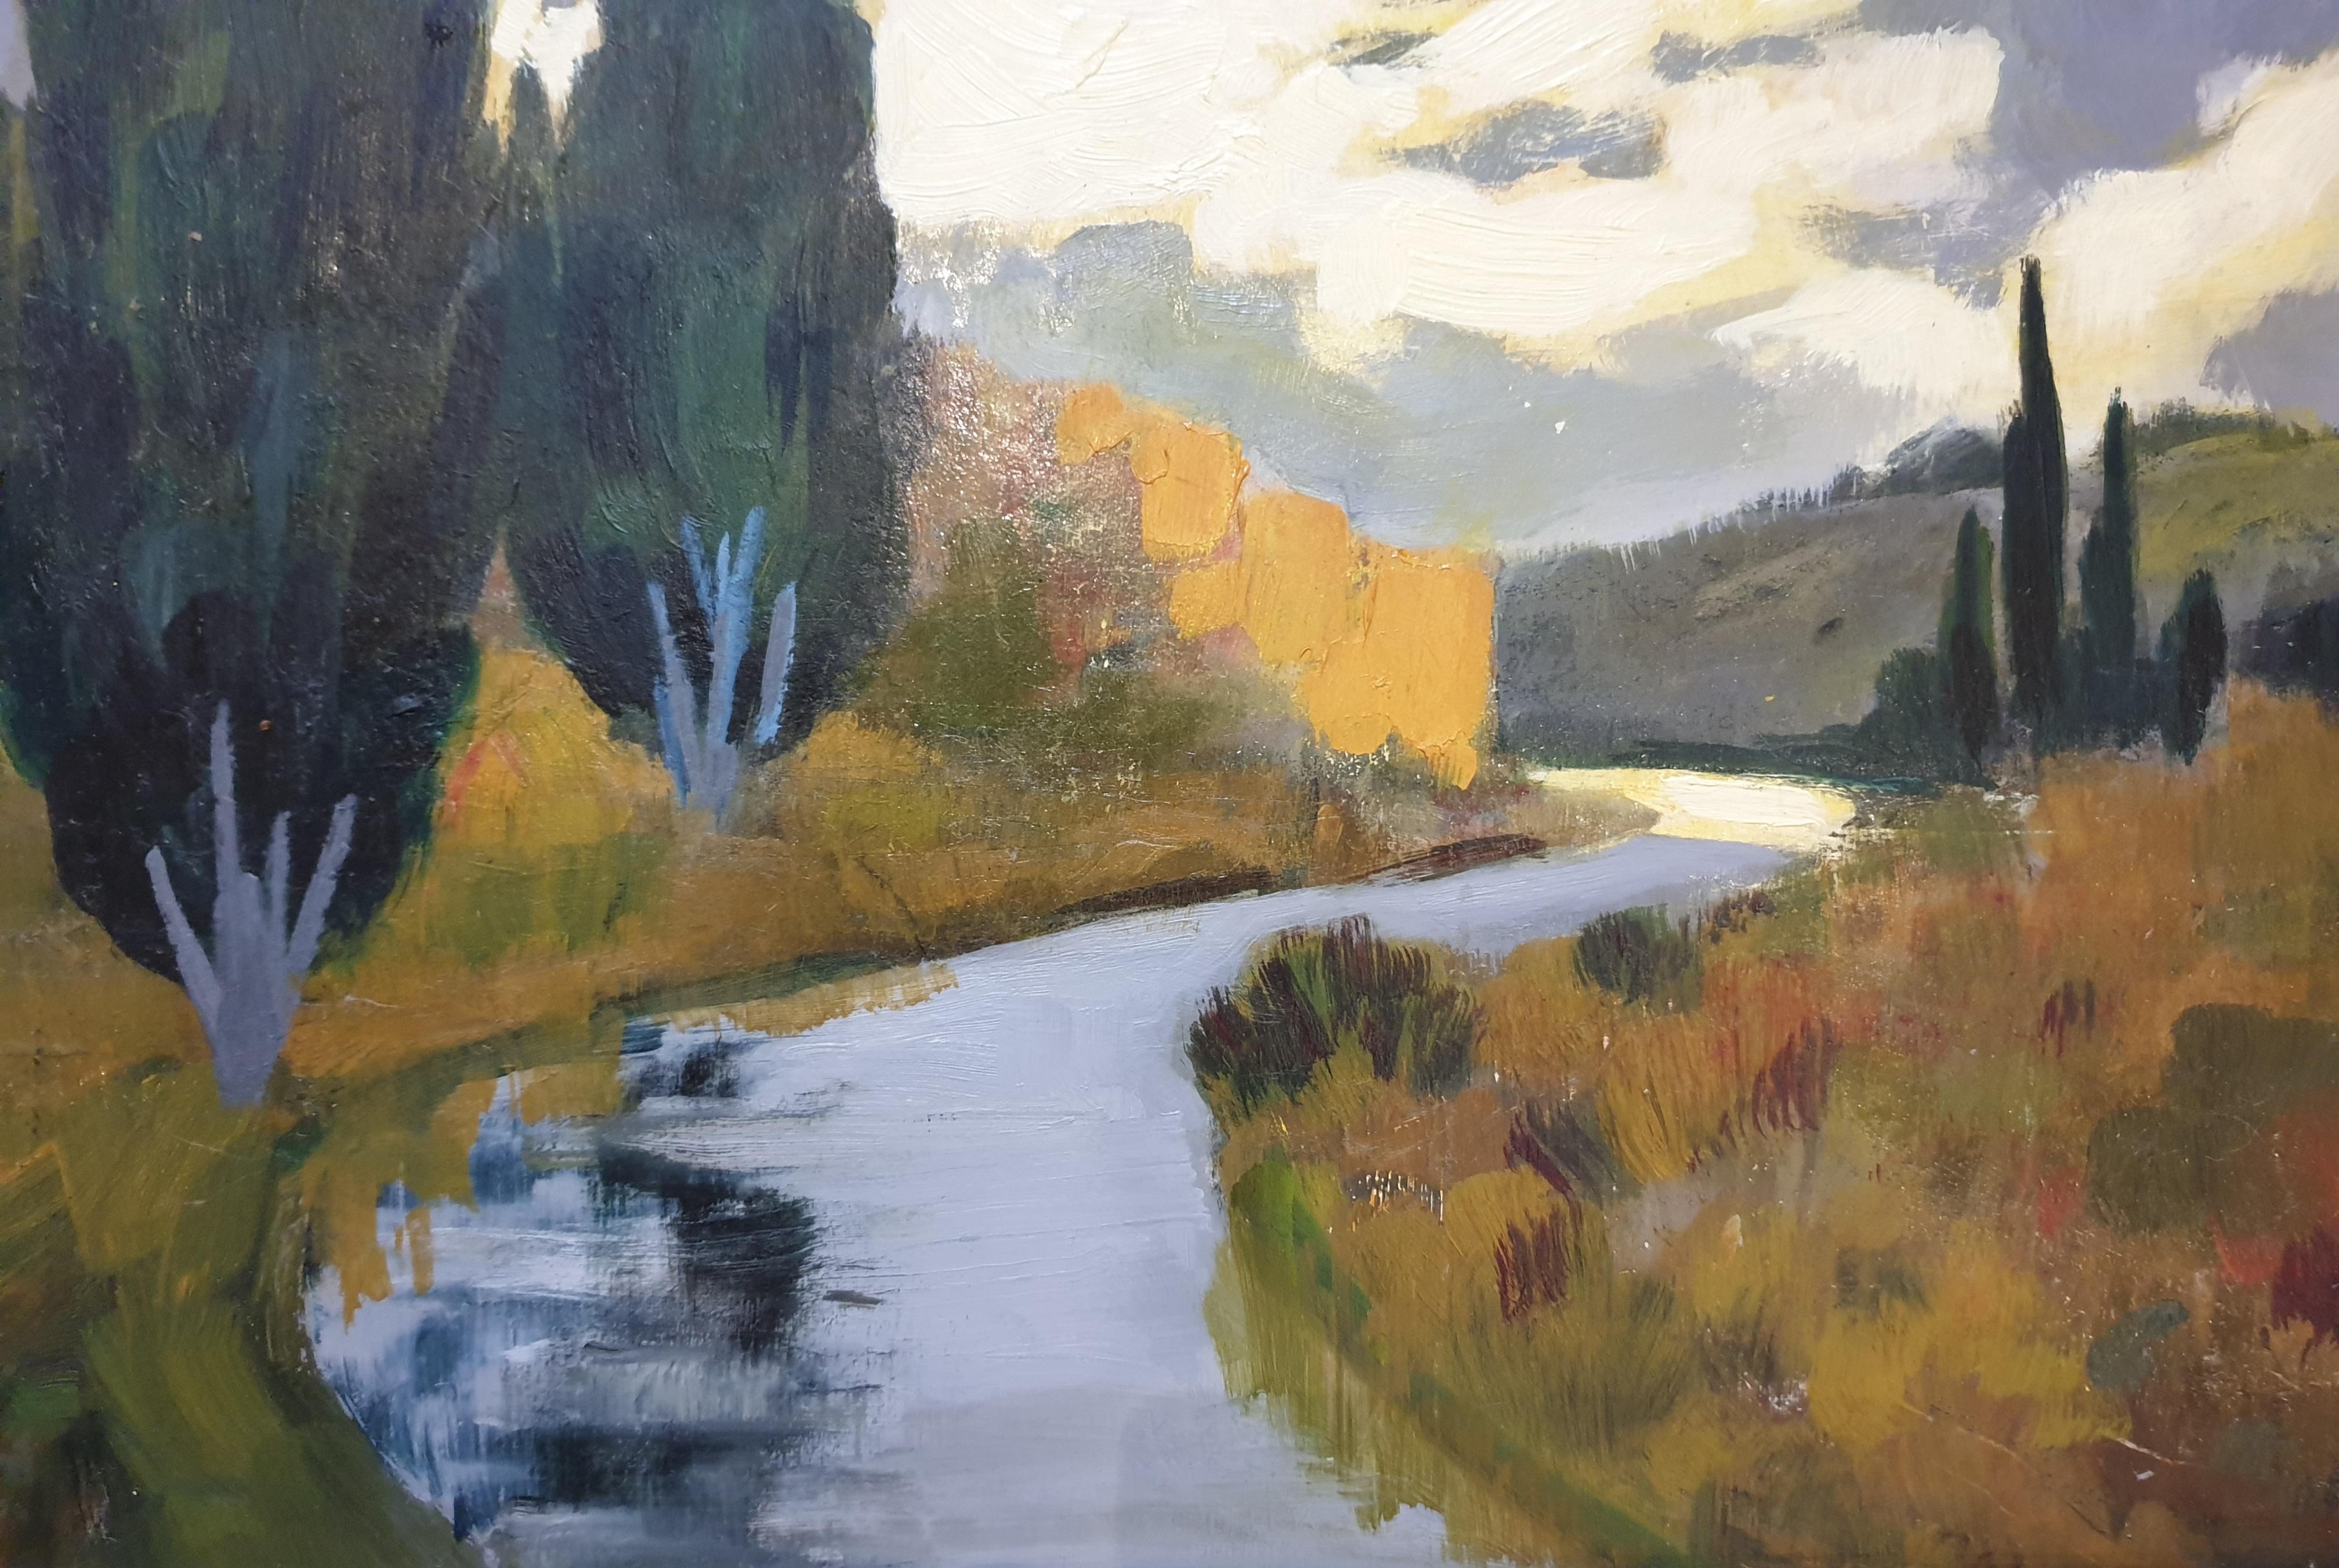 La Routo Bagnado, The Meandering River. - Painting by Jean Pellegrin 